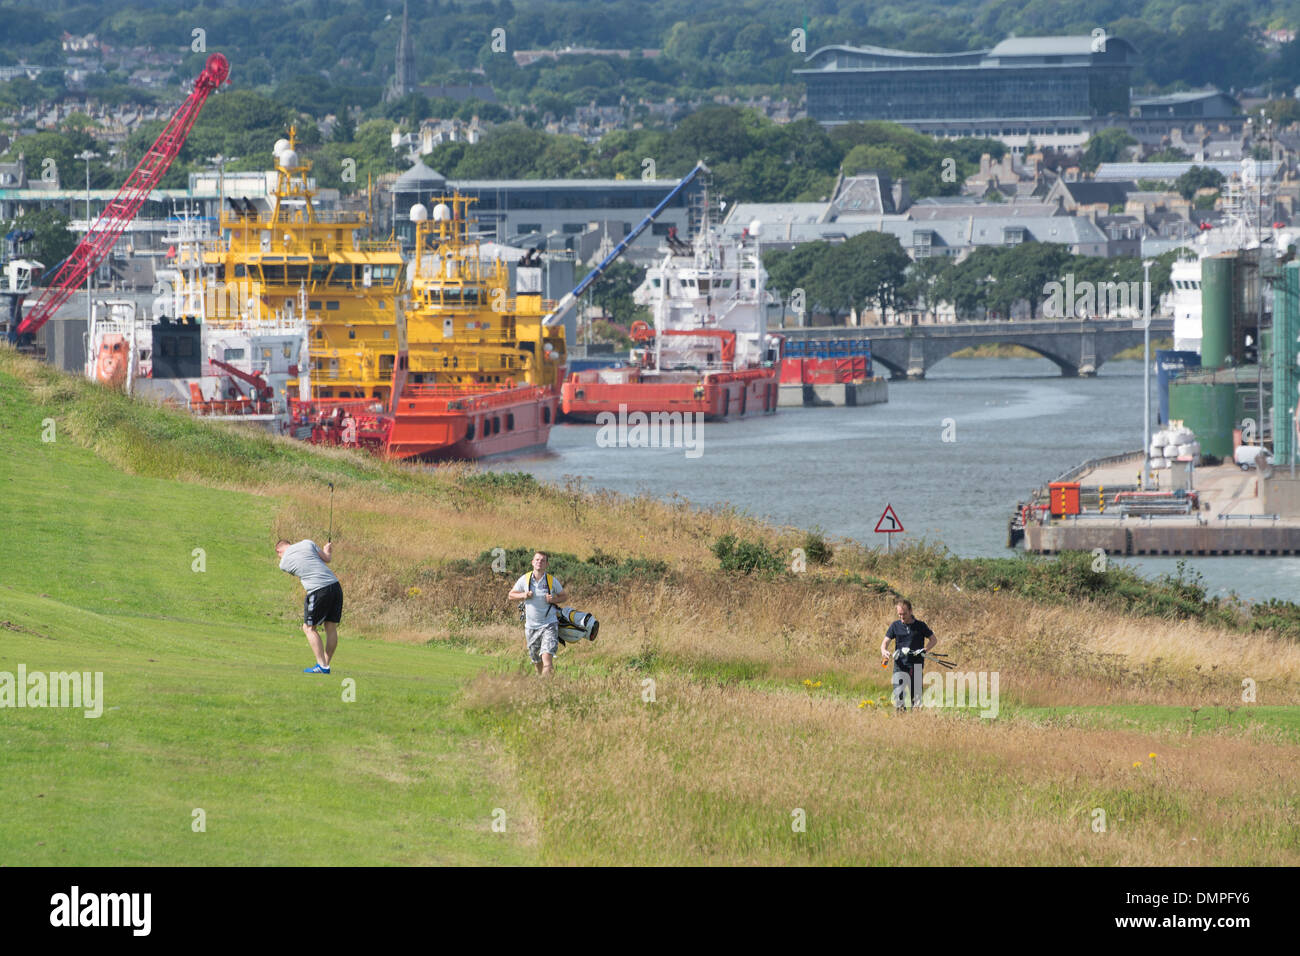 Torry golf golfistas aberdeen buques supply Foto de stock